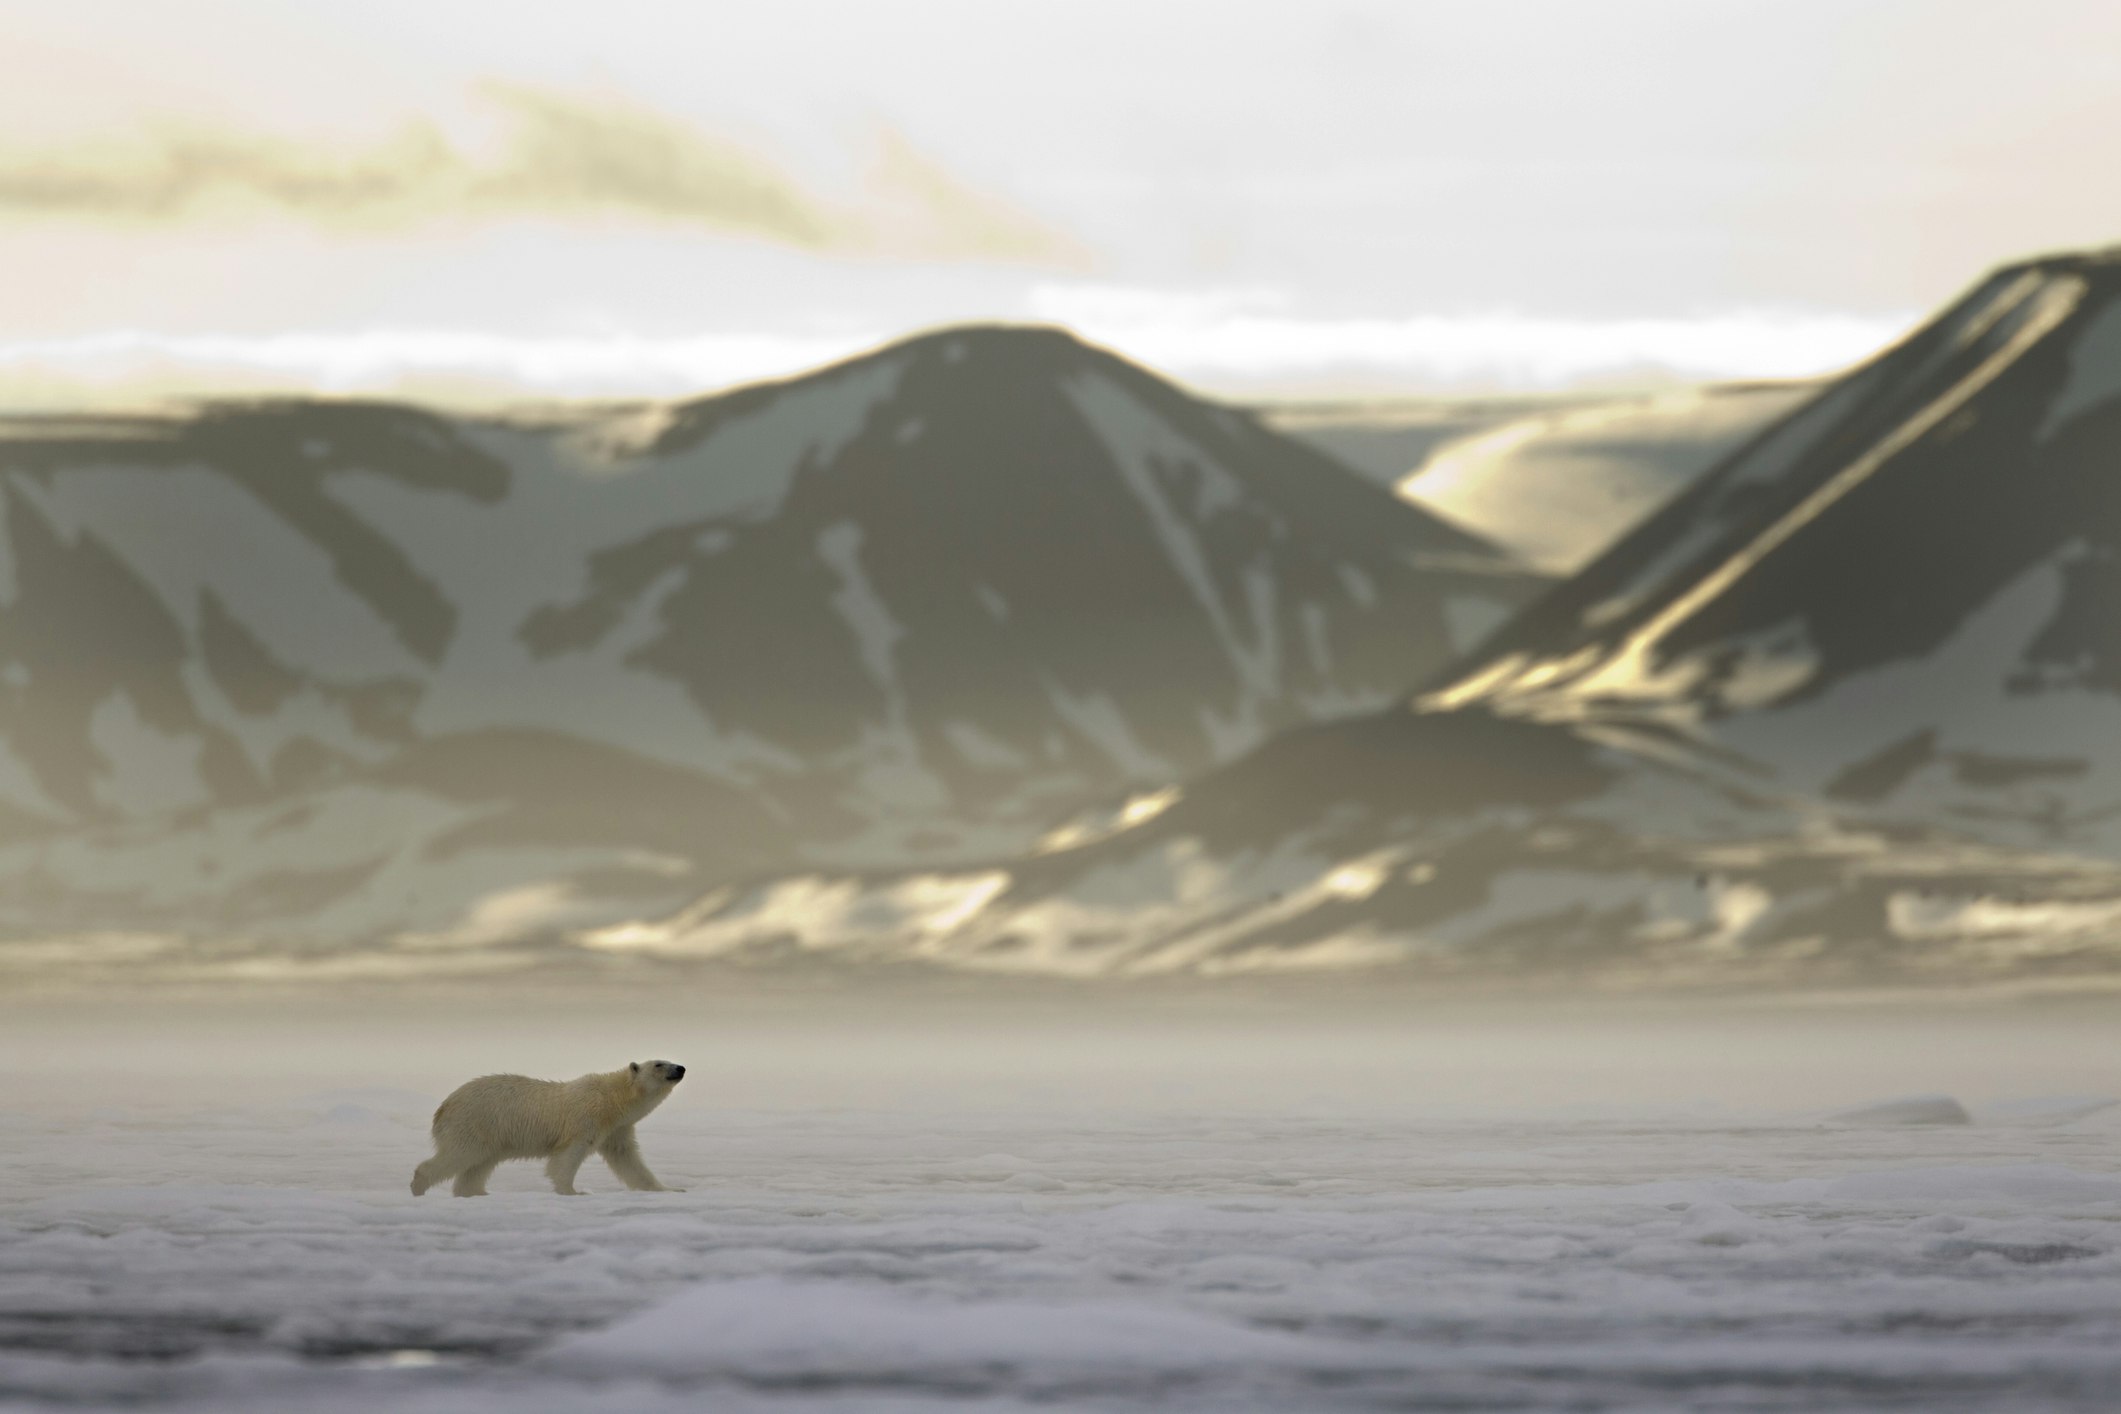 Norway, Svalbard, Spitsbergen Island, Polar Bear (Ursus maritimus) walks across sea ice at entrance to Woodfjorden (Wood Fjord) as midnight sun lights distant mountains